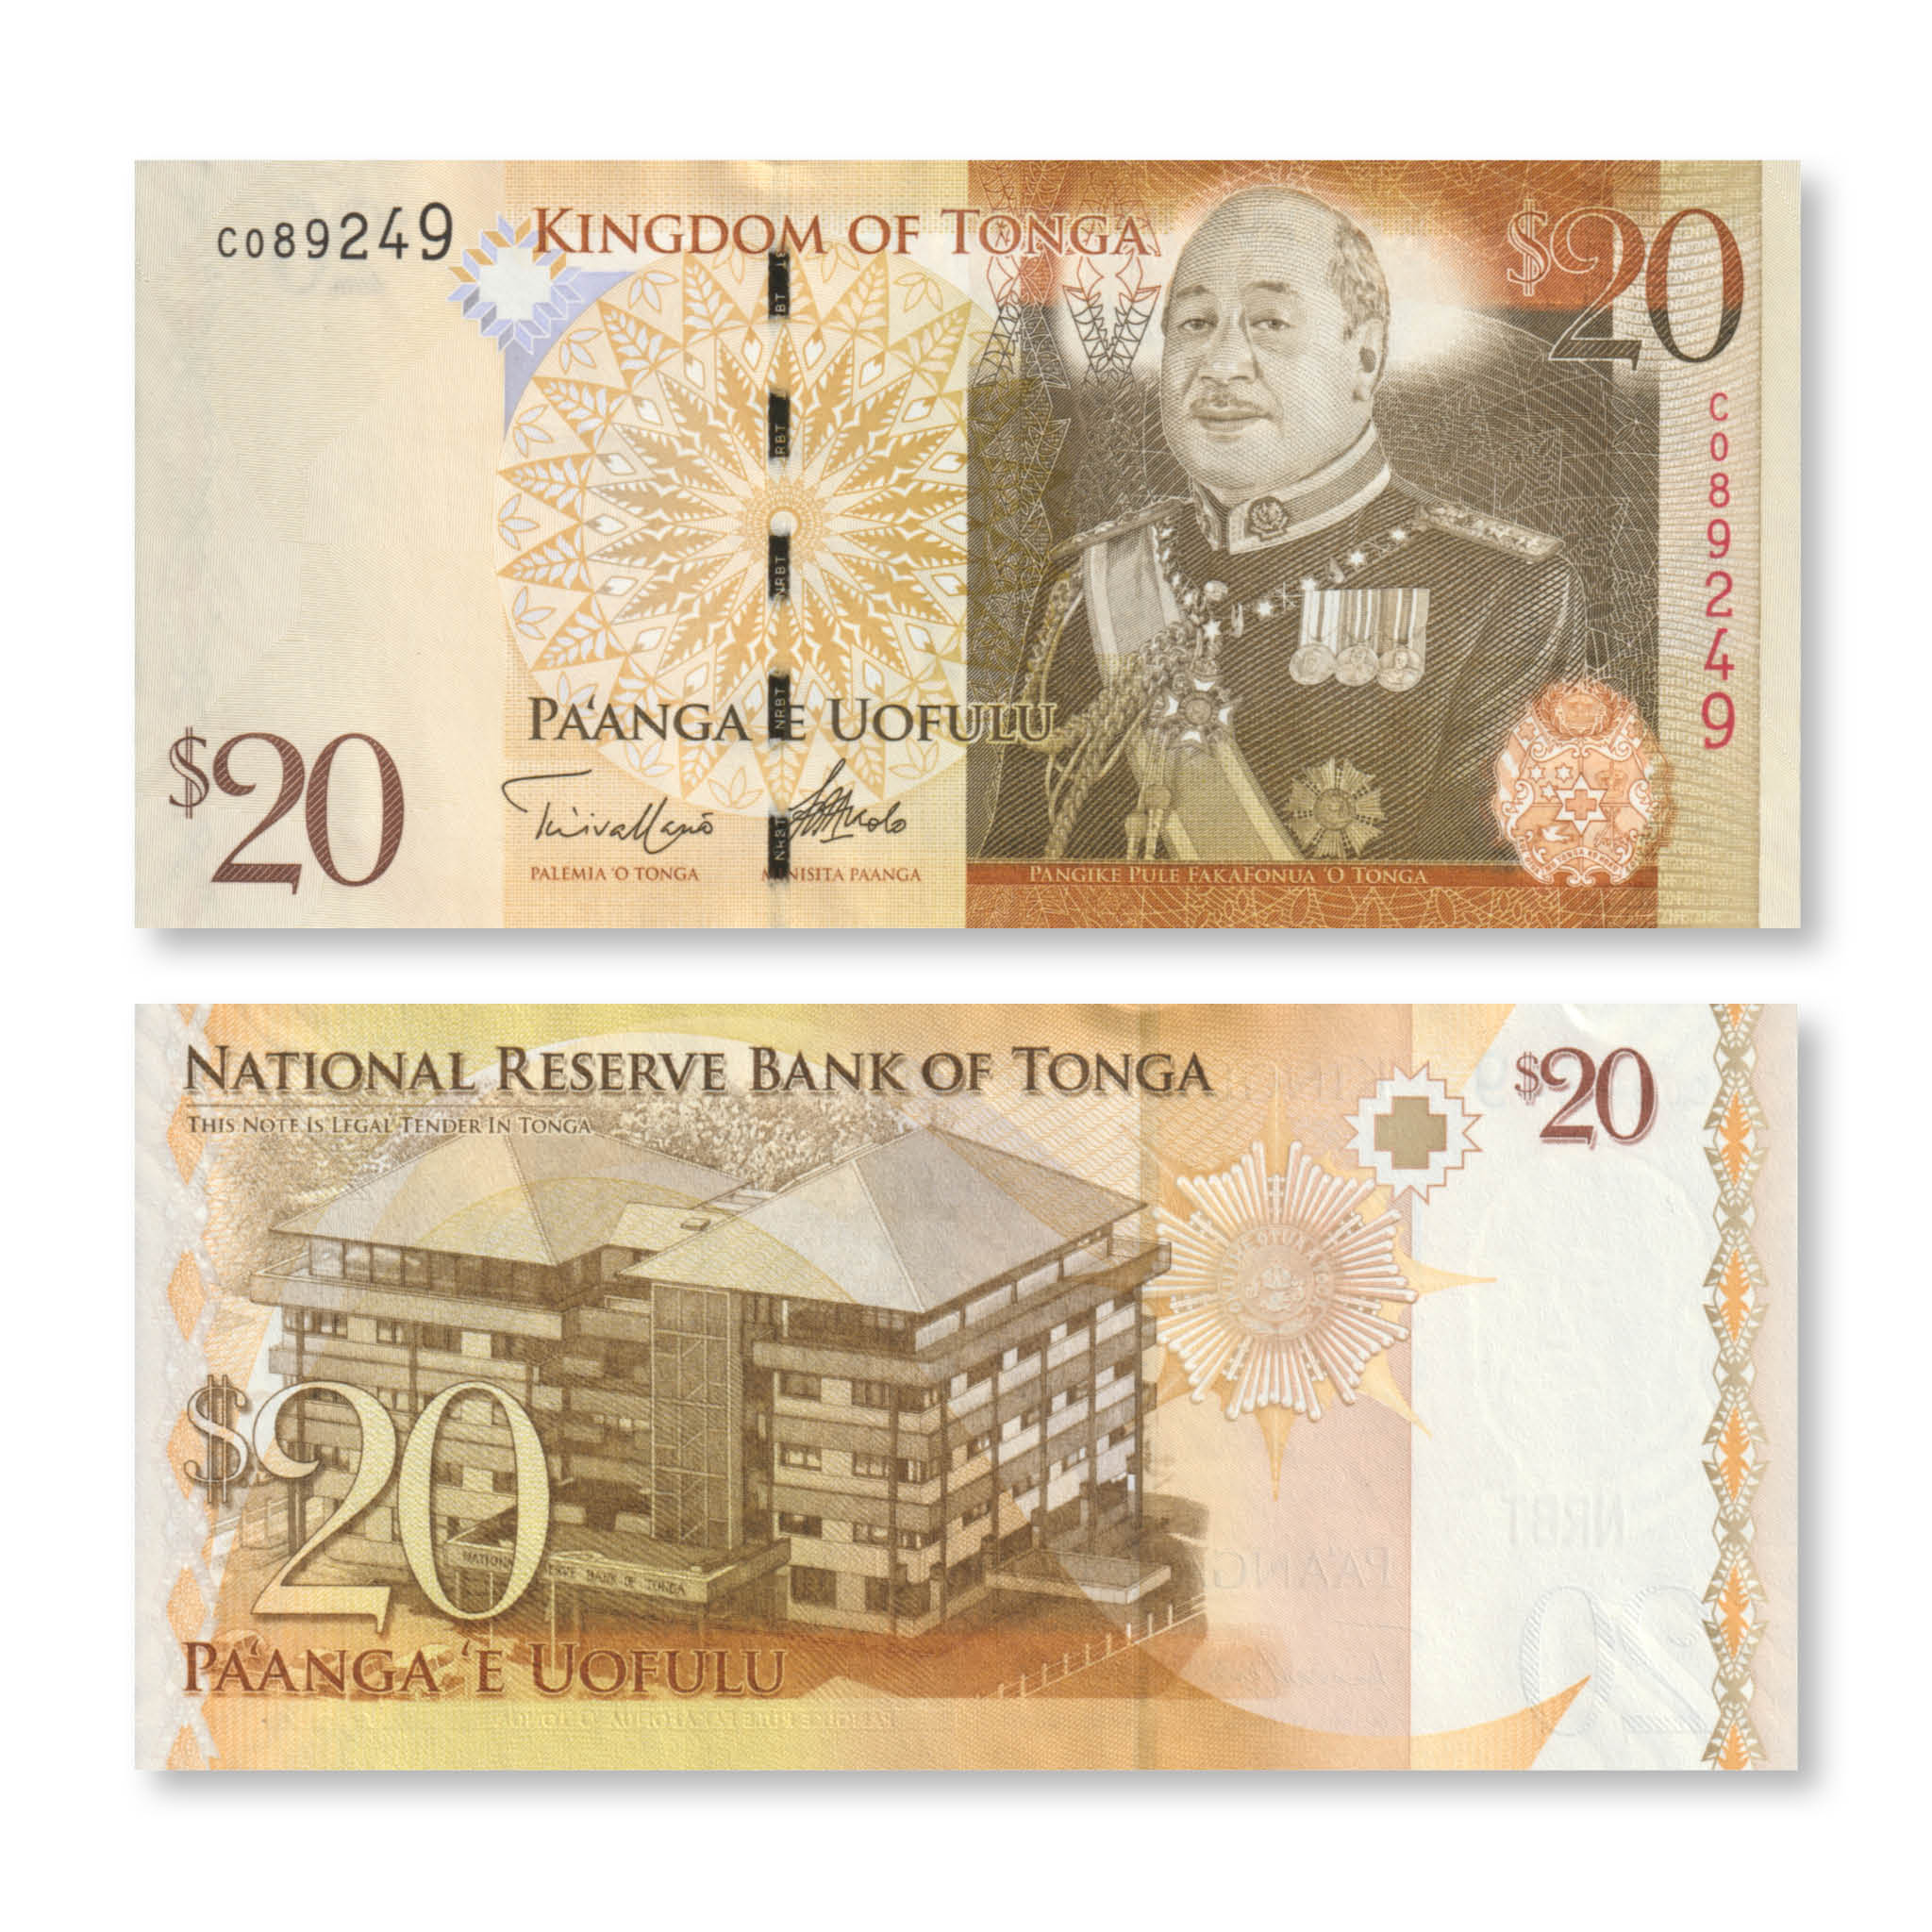 Tonga 20 Pa'anga, 2015, B216b, P41, UNC - Robert's World Money - World Banknotes